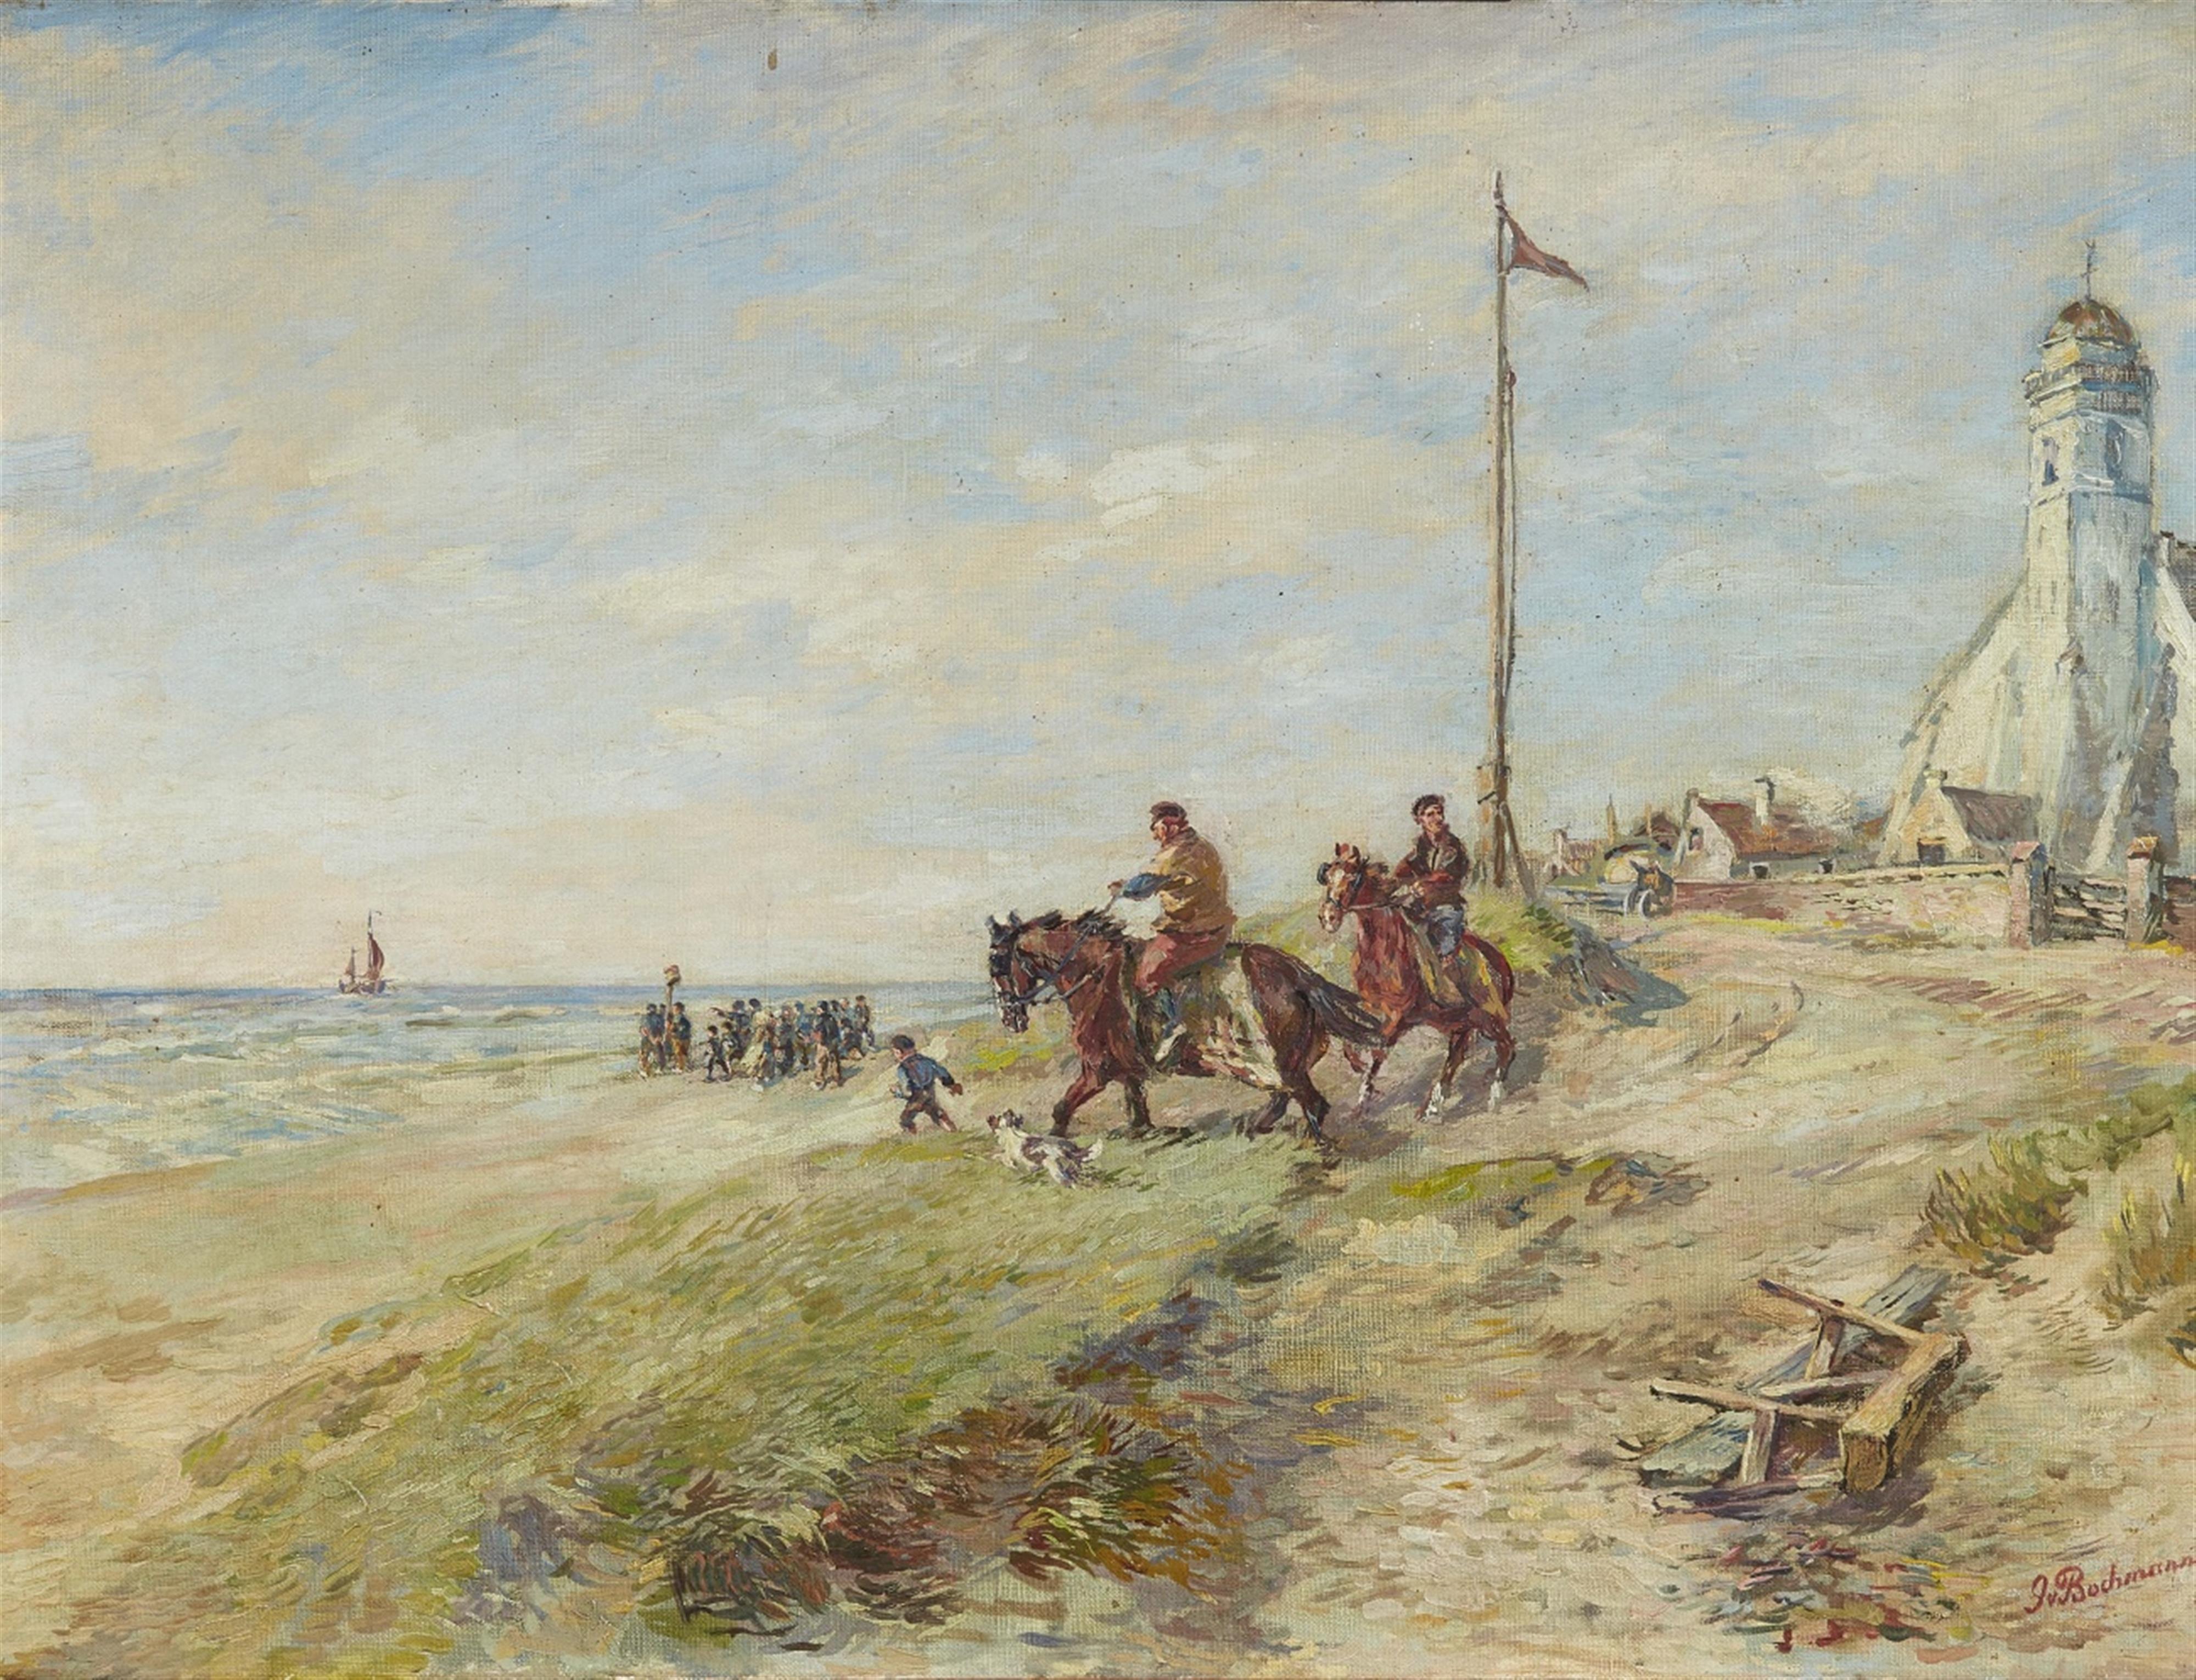 Gregor von Bochmann - Beach Scene with Riders and the Andreaskerk in Katwijk - image-1